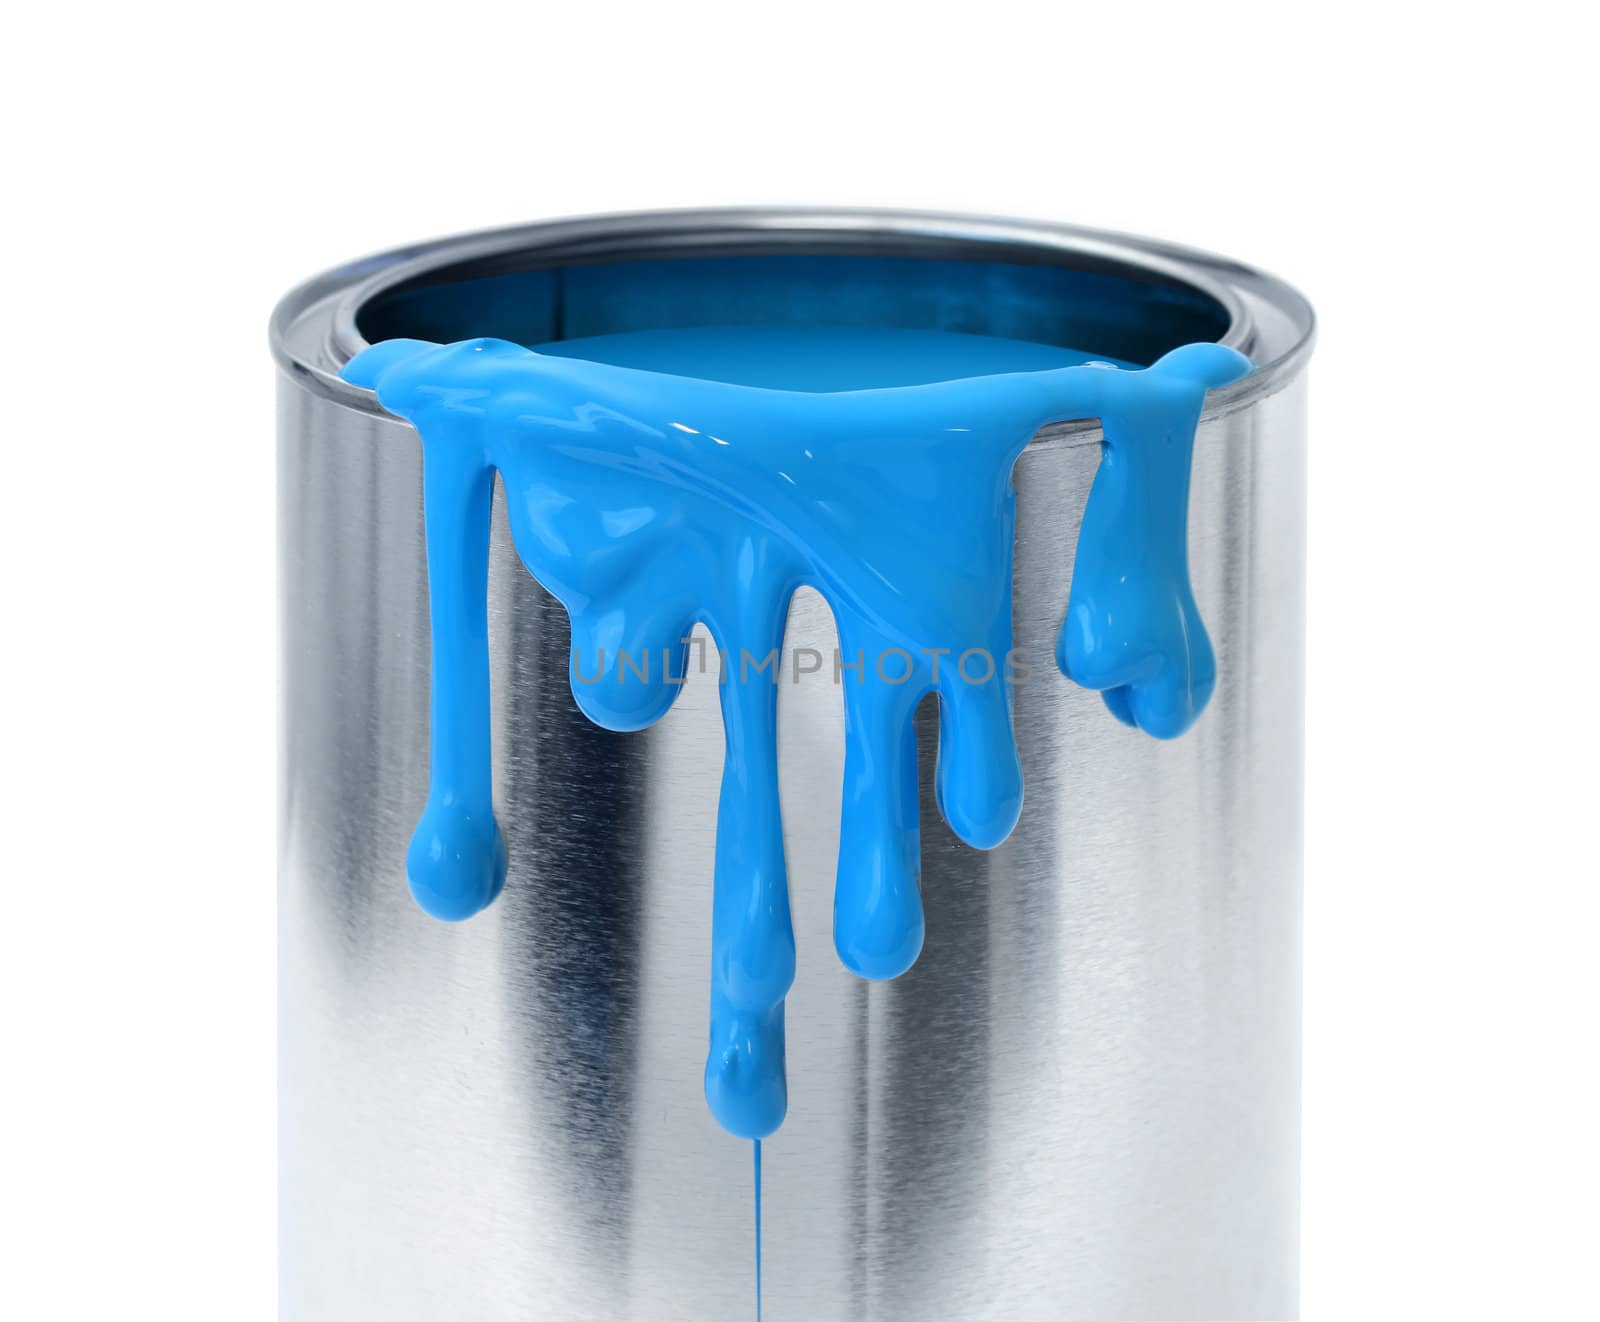 Dripping blue paint by anterovium